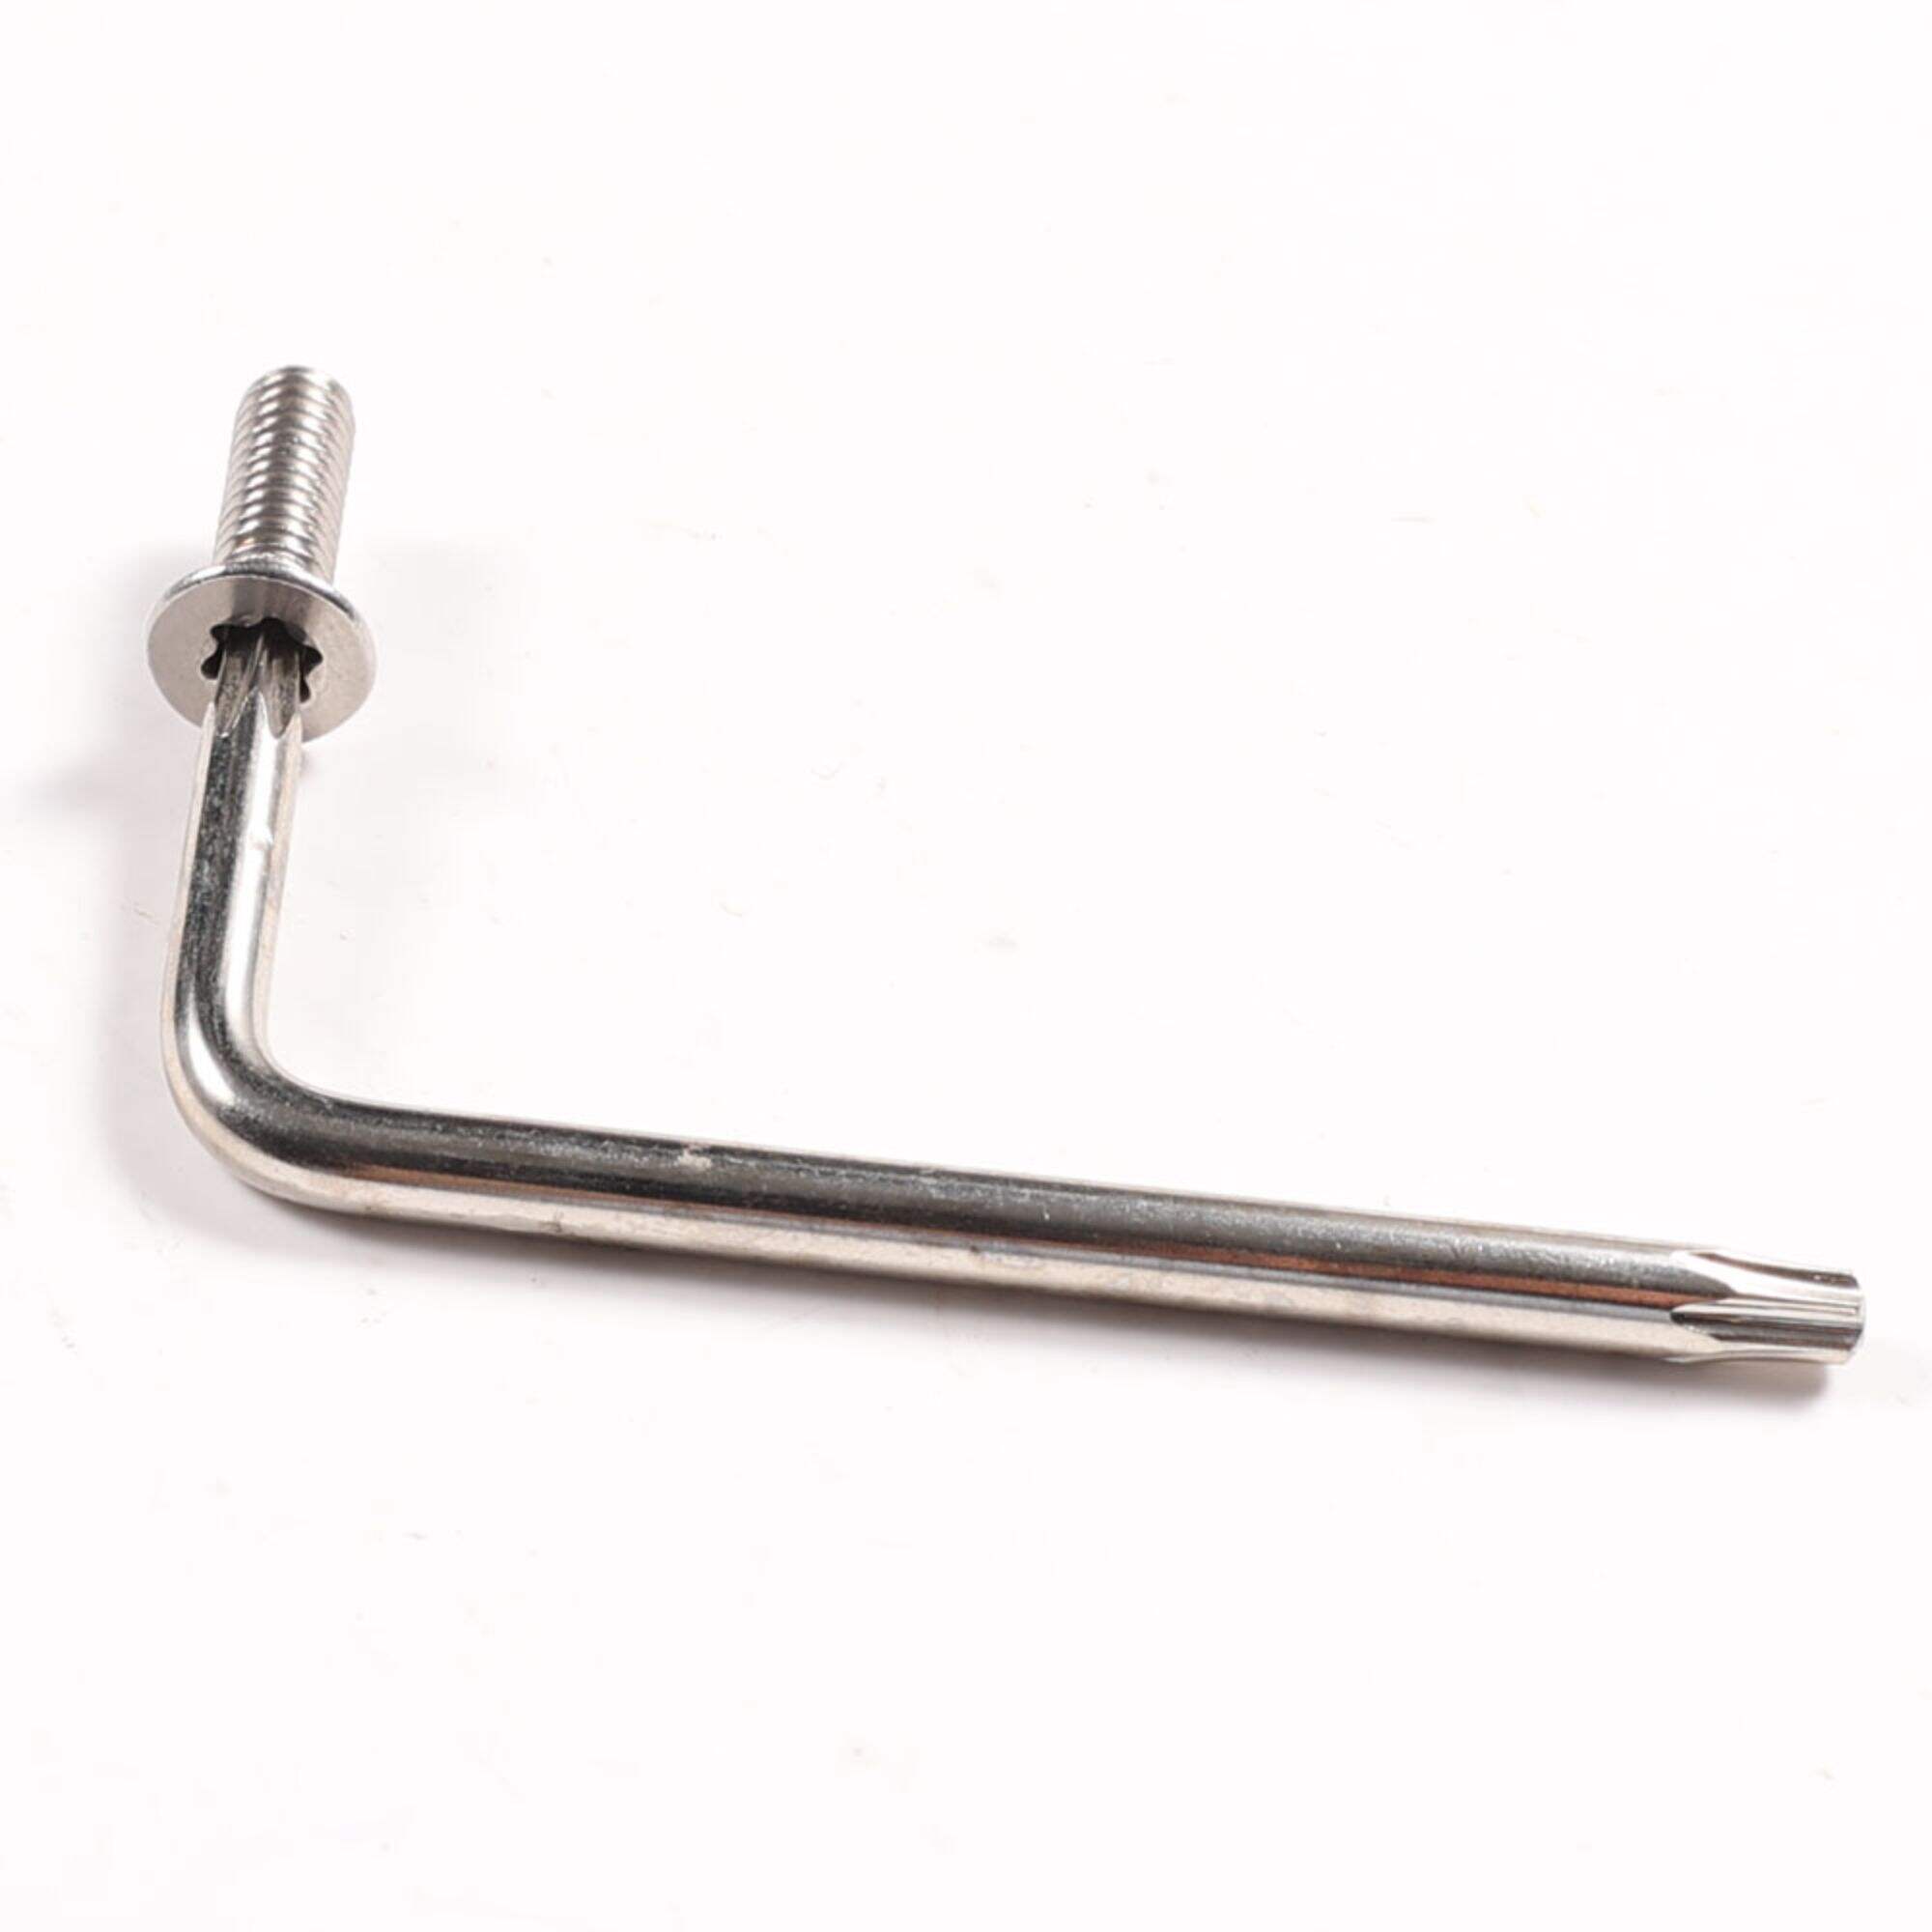 Precision Hex Key Hex Screwdriver Allen Wrench Allen Key Wholesale In China